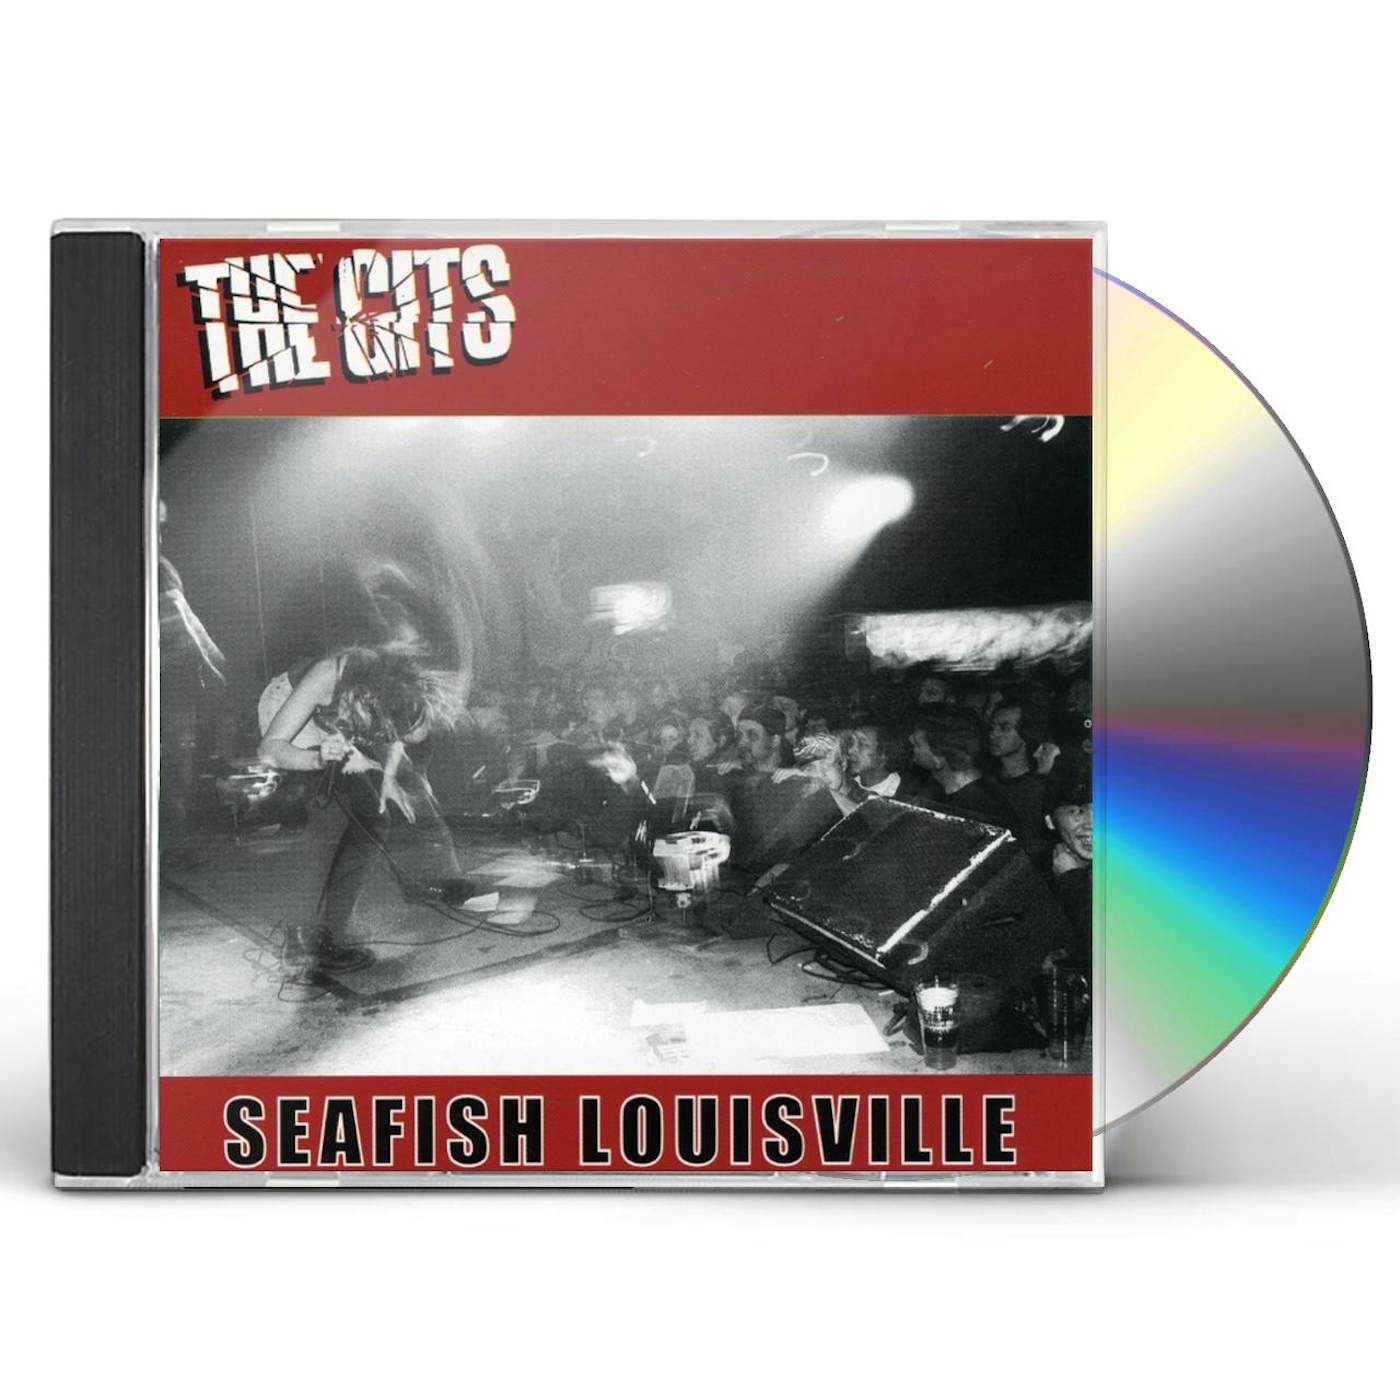 GITS SEAFISH LOUISVILLE CD